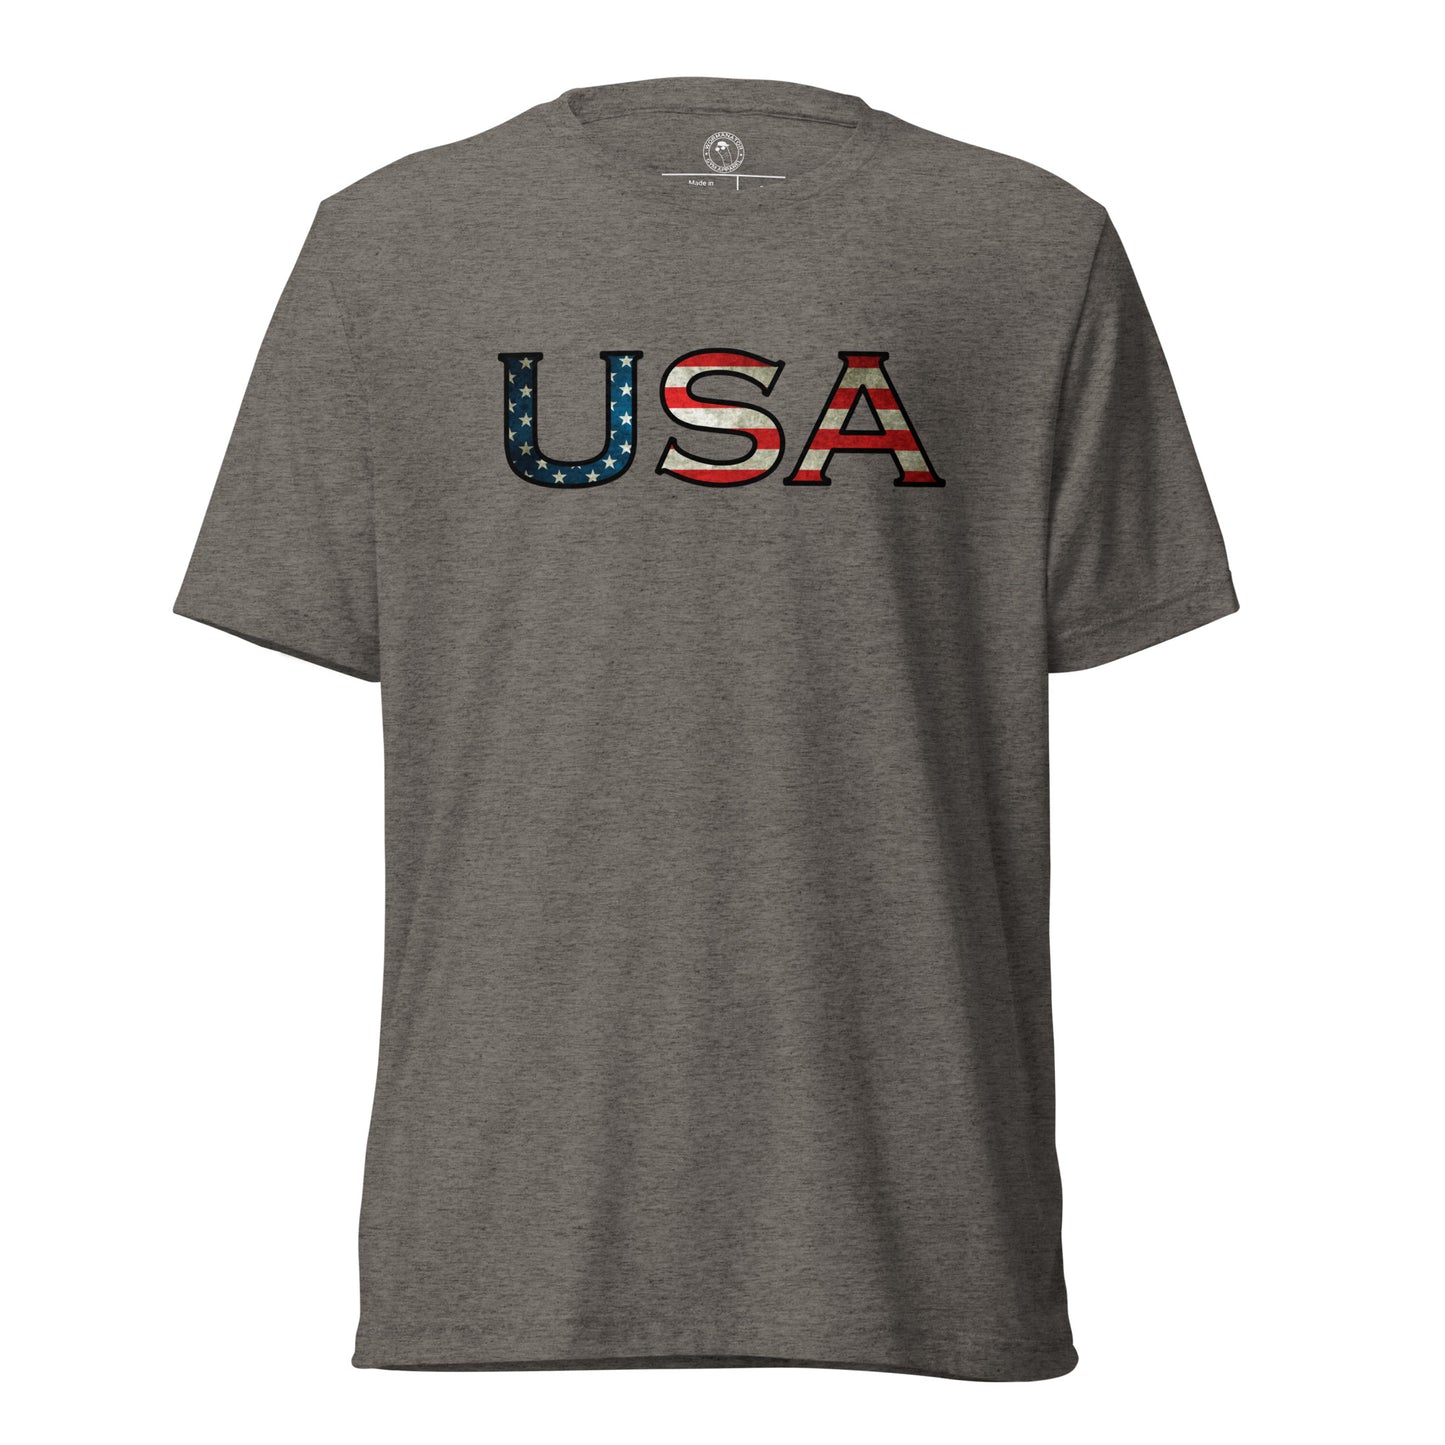 USA T-Shirt in Grey Triblend